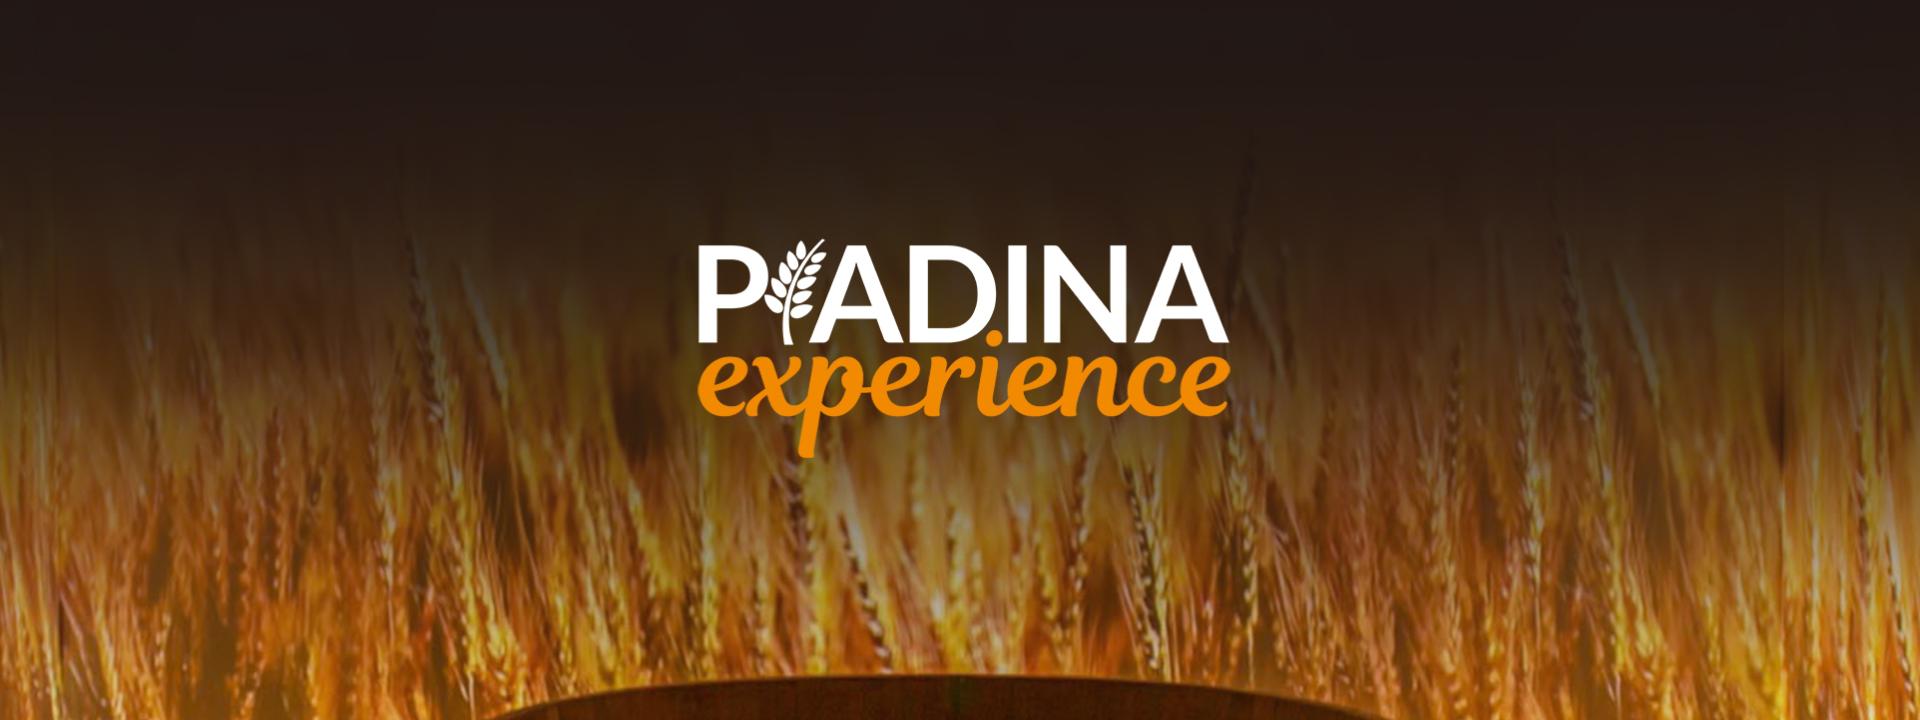 Piadina Experience - Un viaggio multimediale sulla Piadina Romagnola